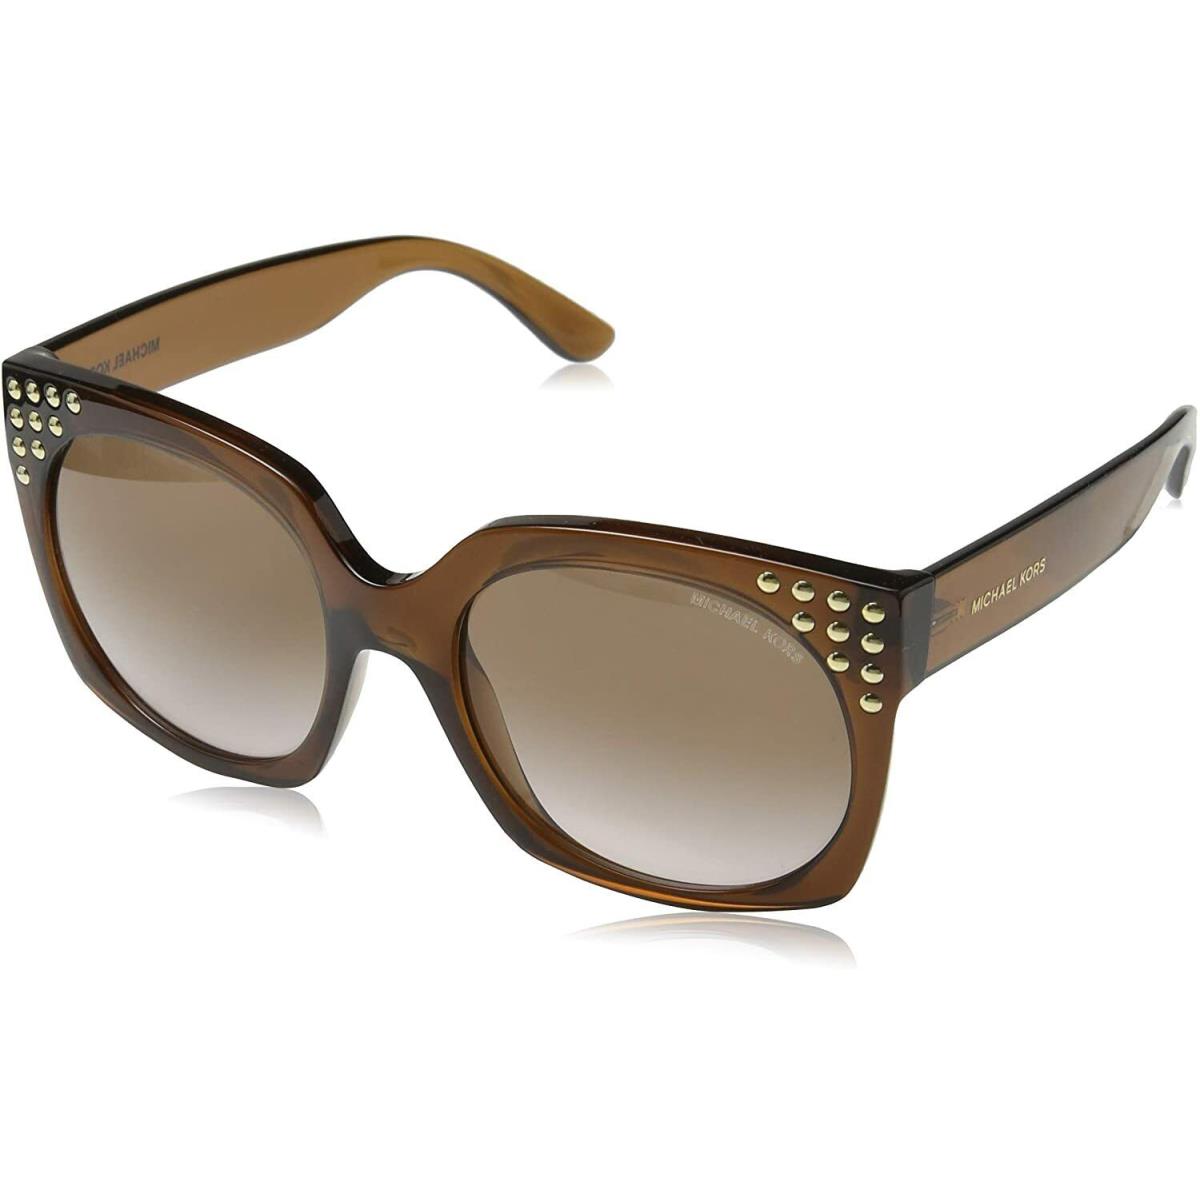 Michael Kors sunglasses  - Brown , Transparent brown and gold Frame, Brown grey Gradient Lens 7